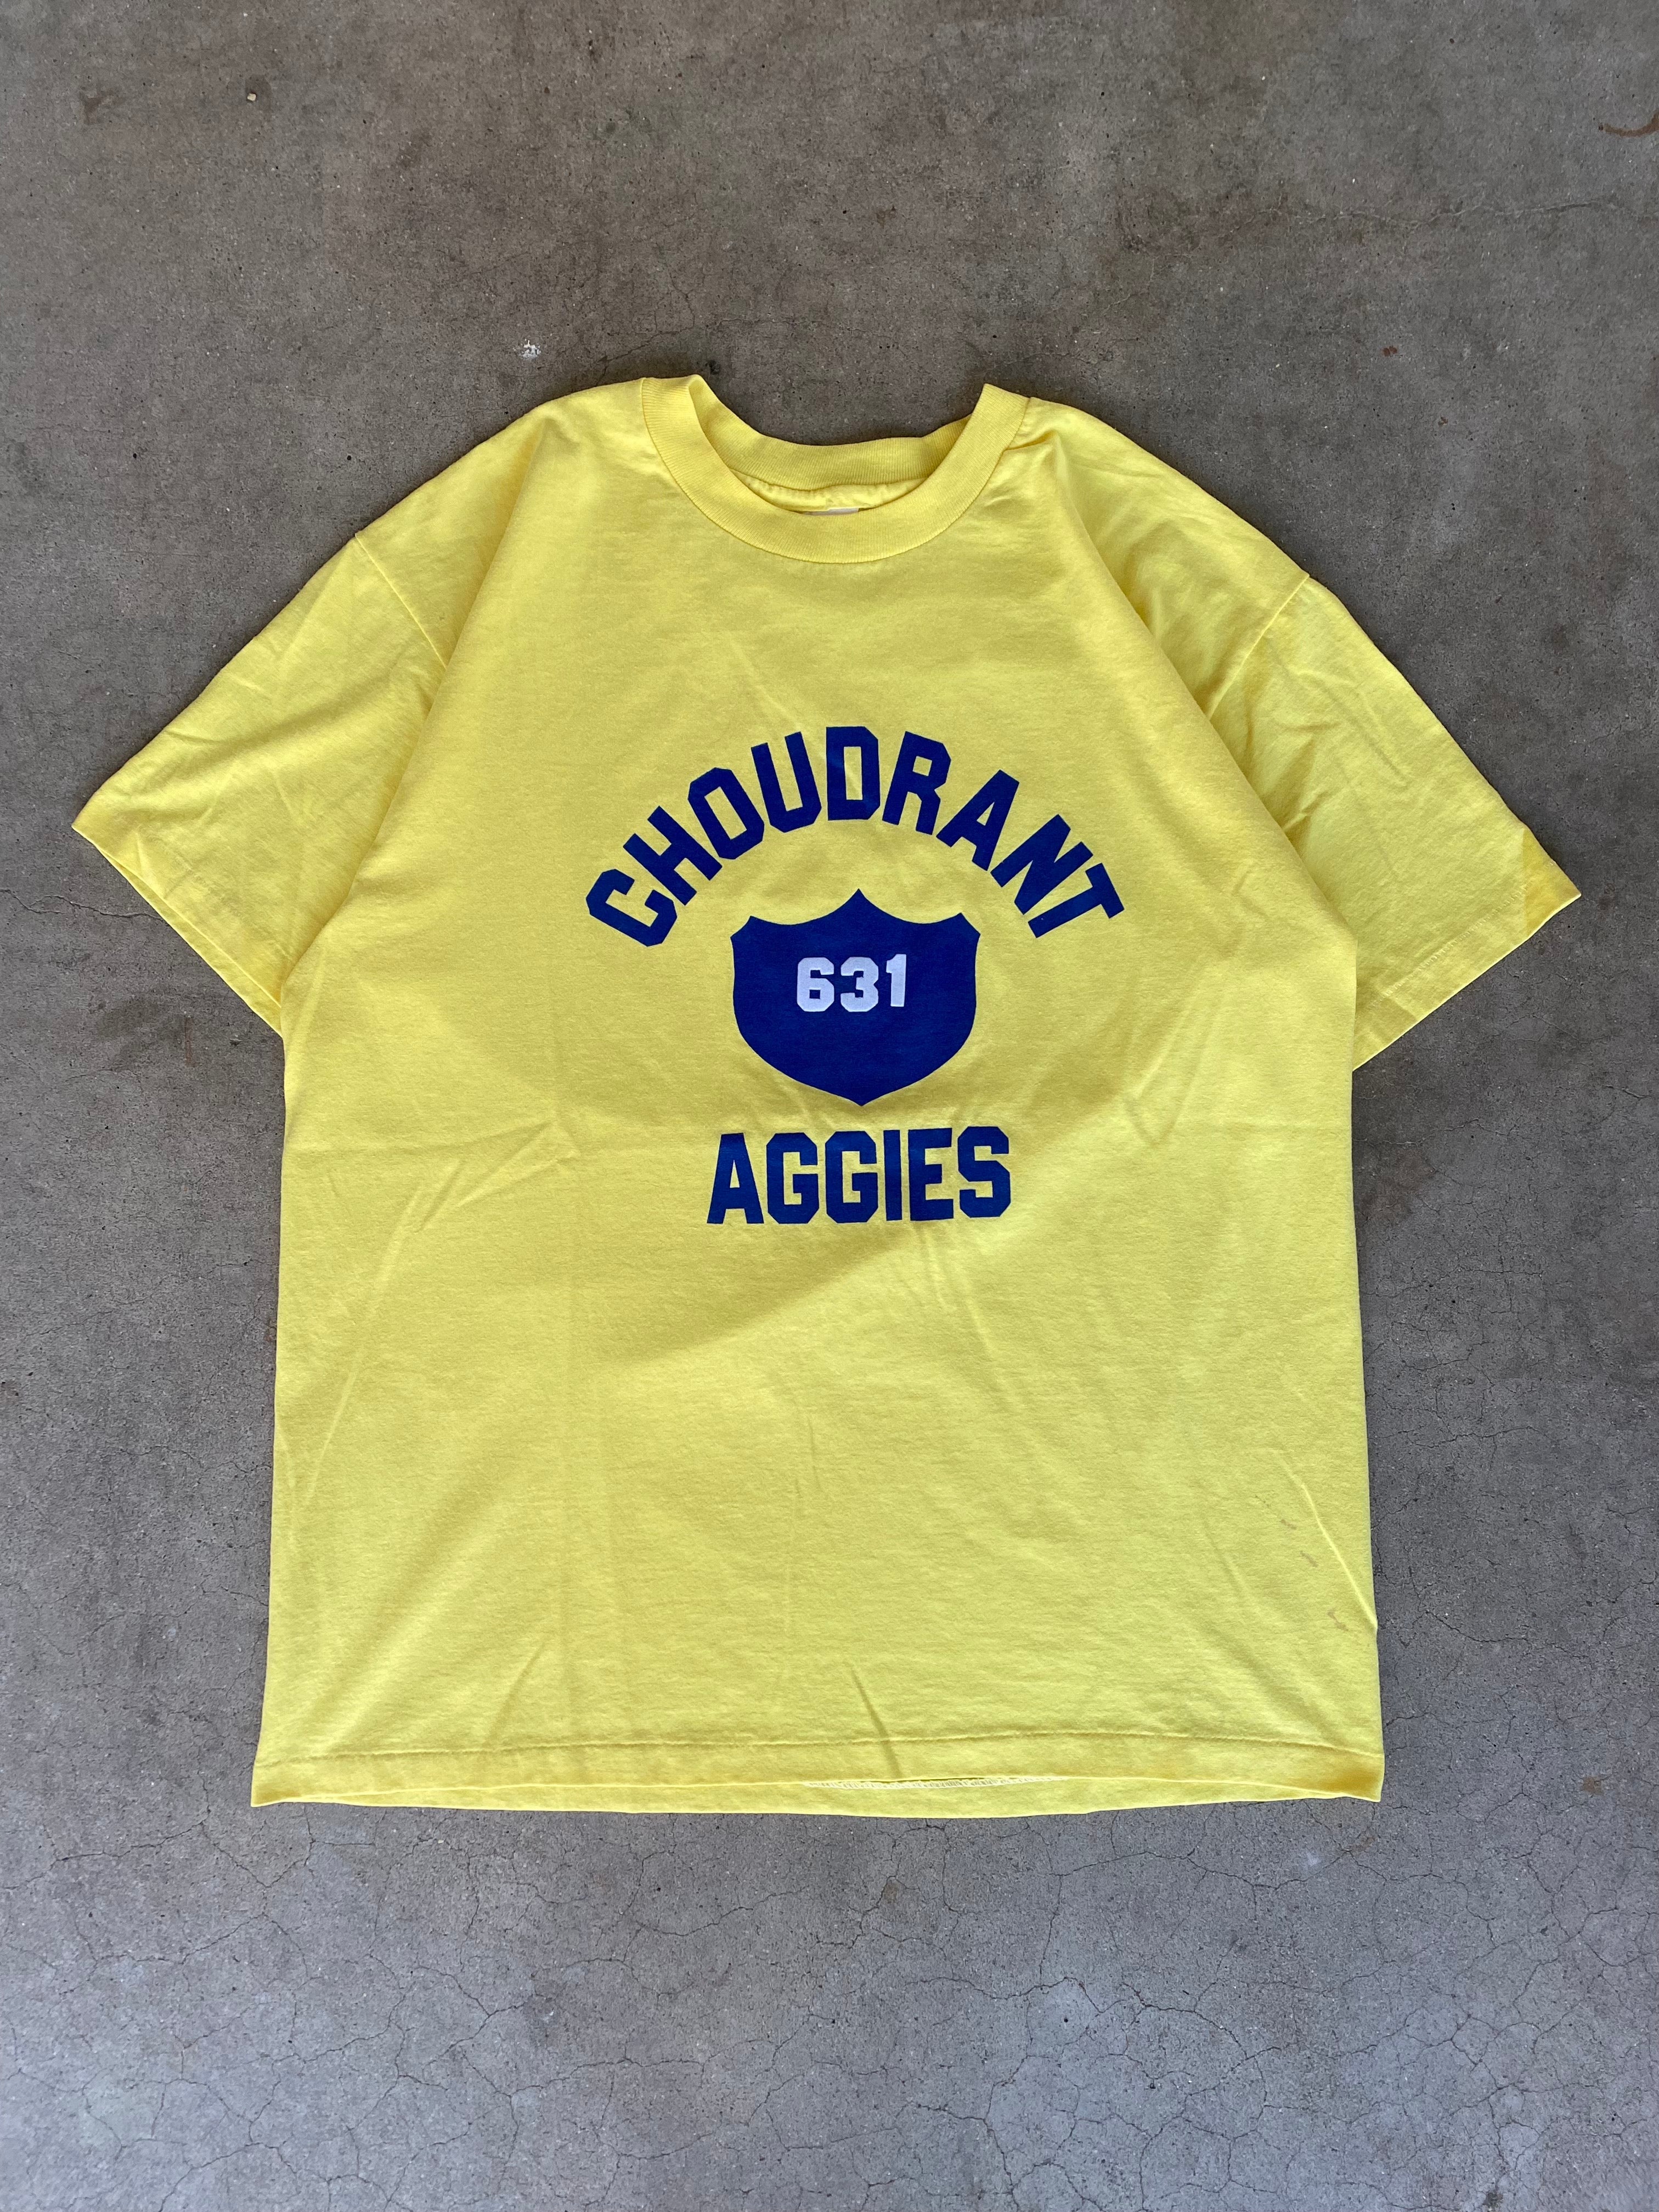 1980s Choudrant Aggies T-Shirt (M/L)